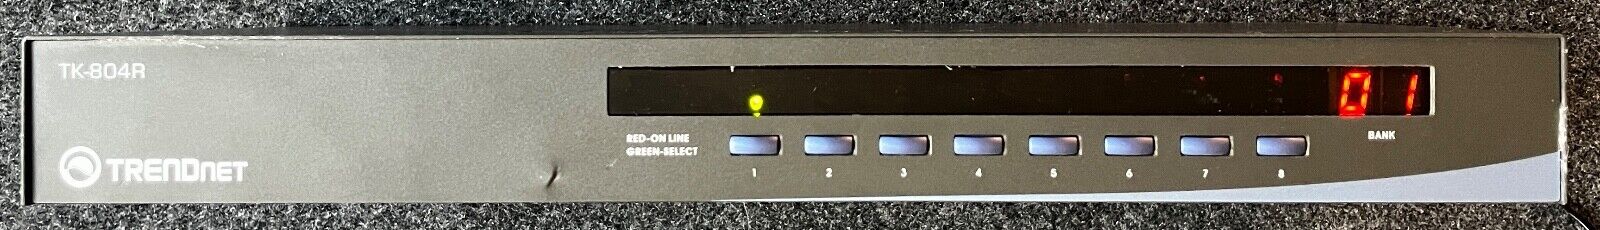 TRENDnet TK-803R 8-Port Rack Mount USB PS/2 KVM Switch - NO POWER SUPPLY